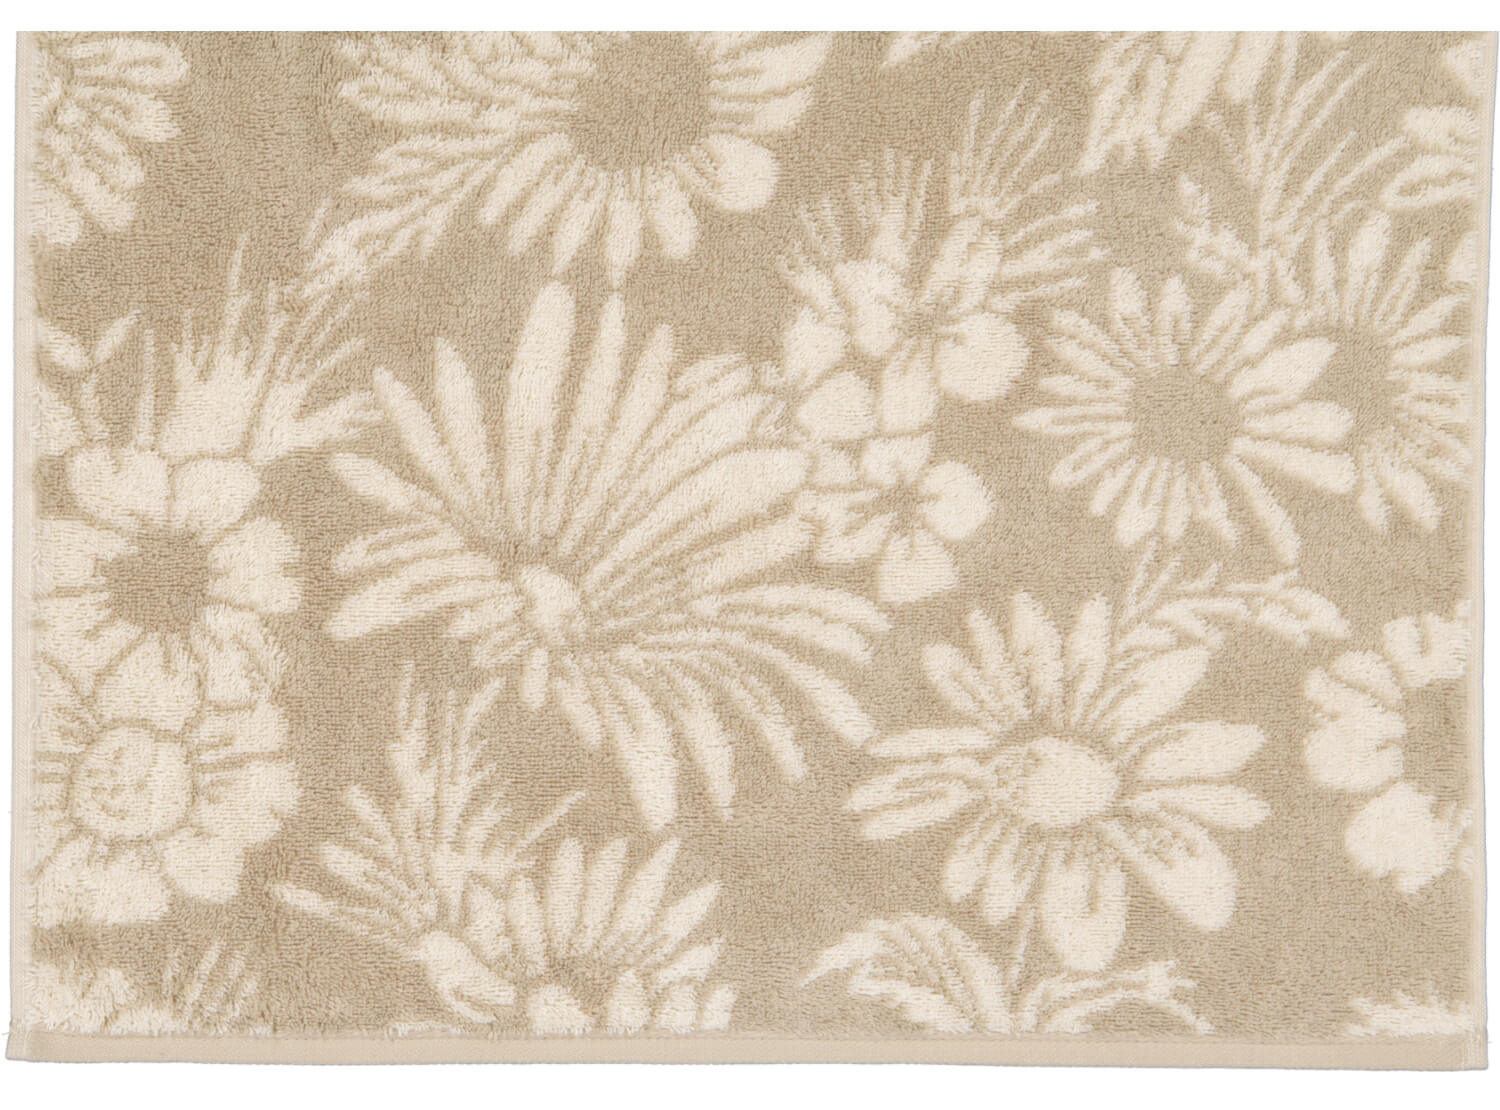 Полотенце премиум класса  Edition Floral Sand (638-33)